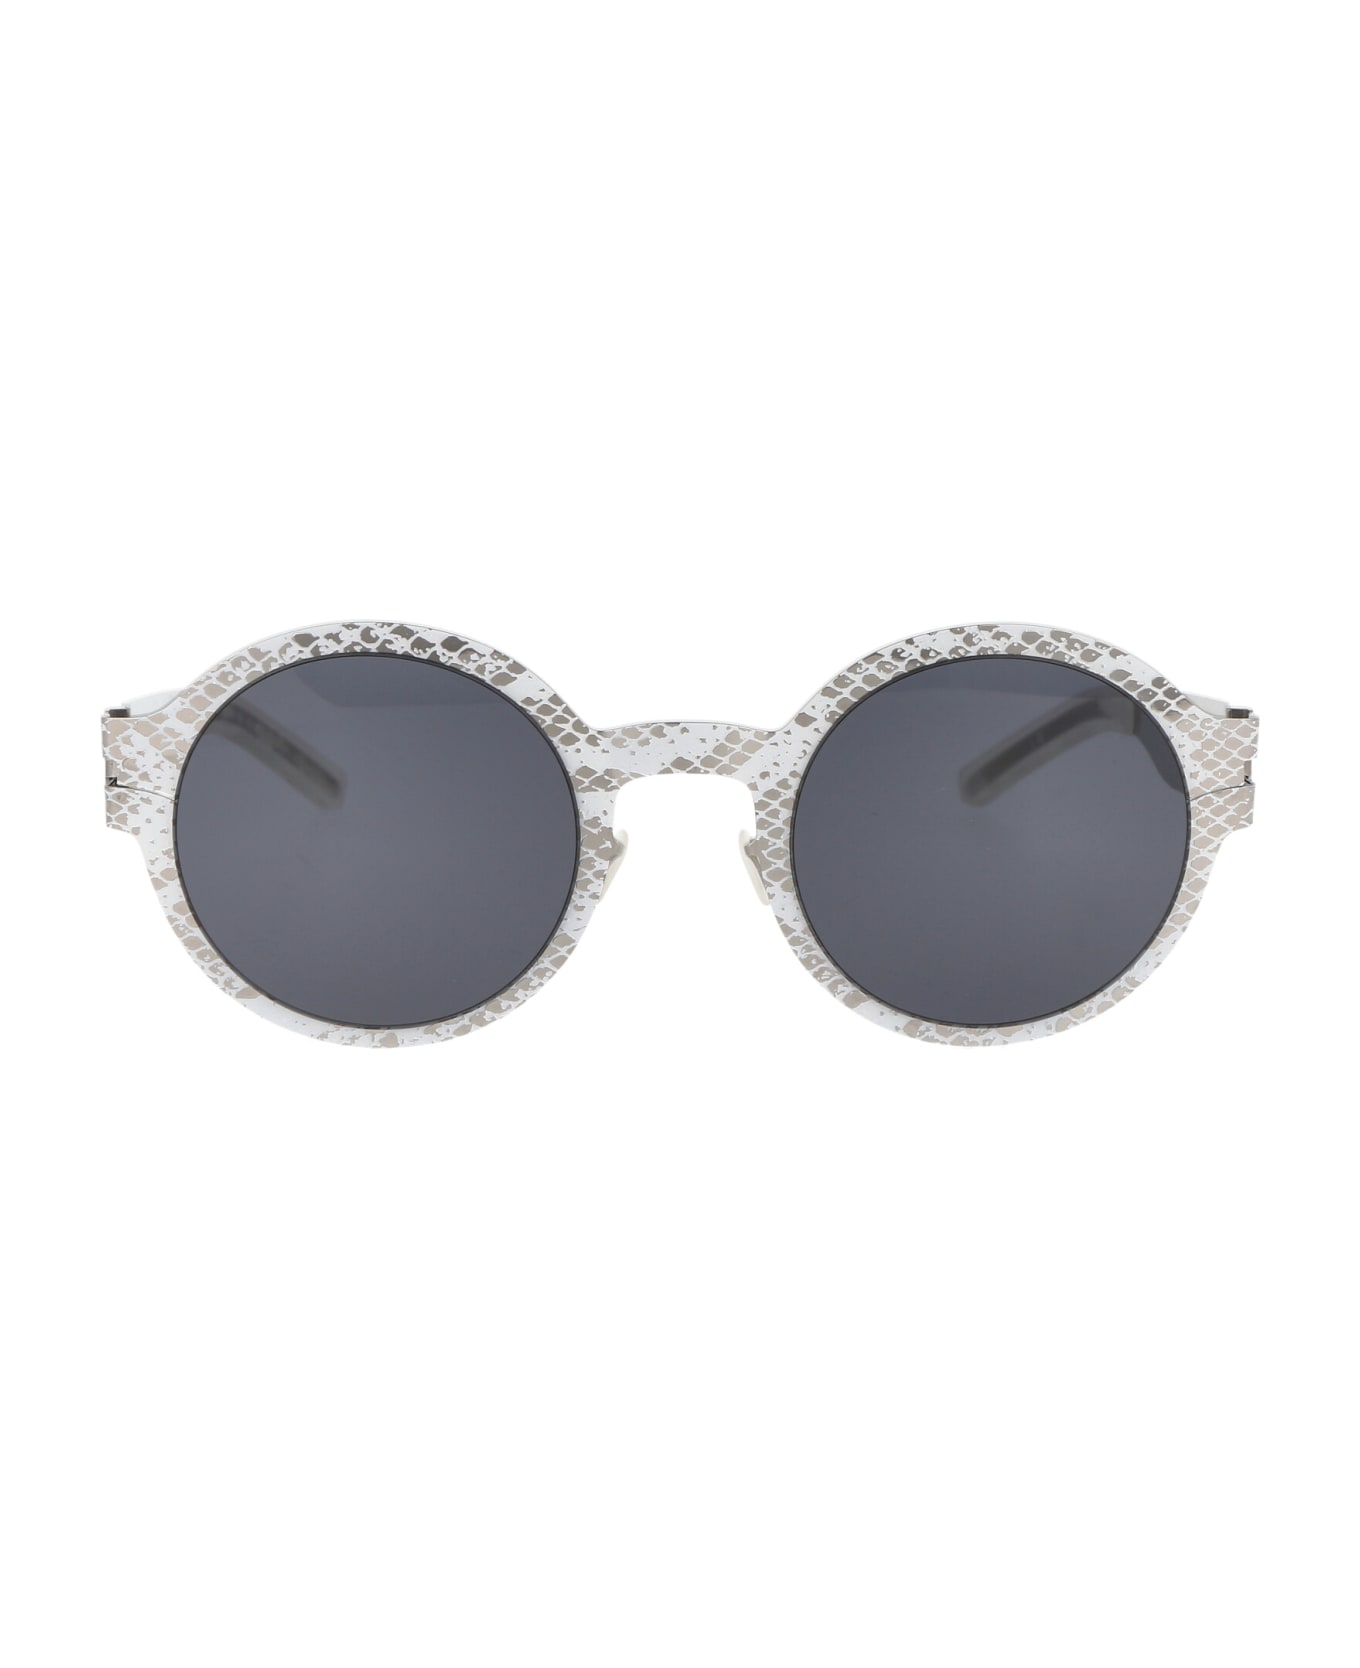 Mykita Mmtransfer003 Sunglasses - 241 Silver White Python Dark Grey Solid